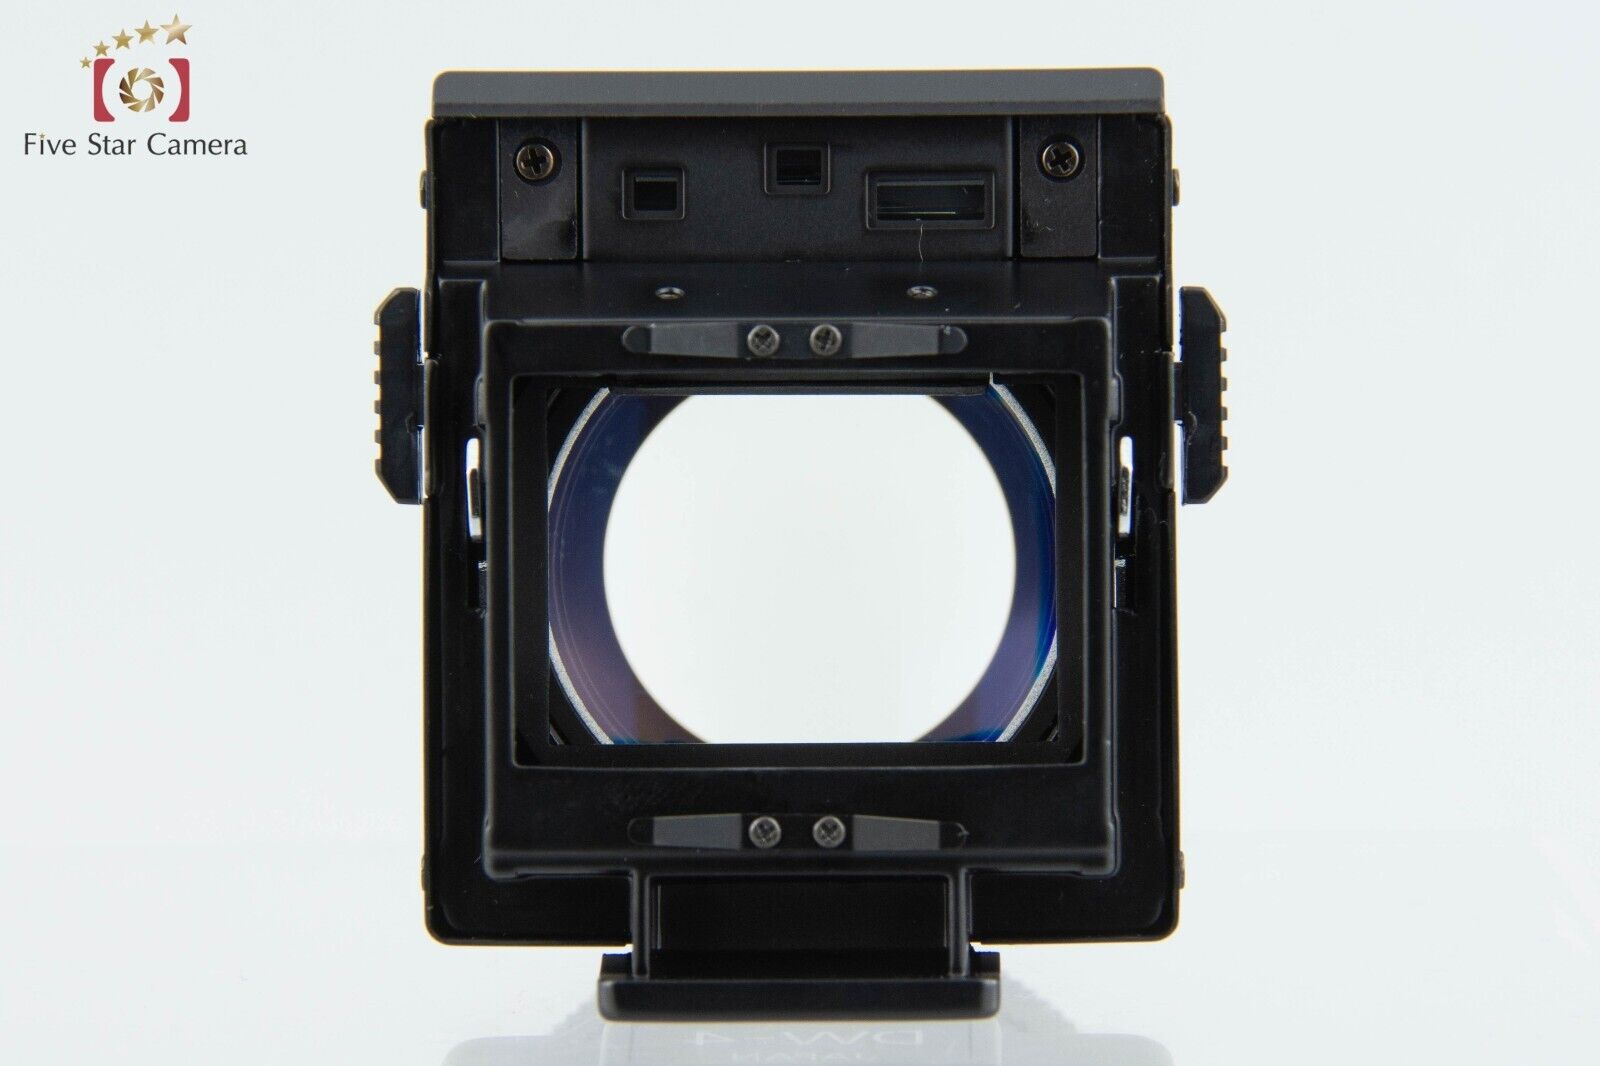 Near Mint!! Nikon DW-4 Magnifier Viewfinder for F3